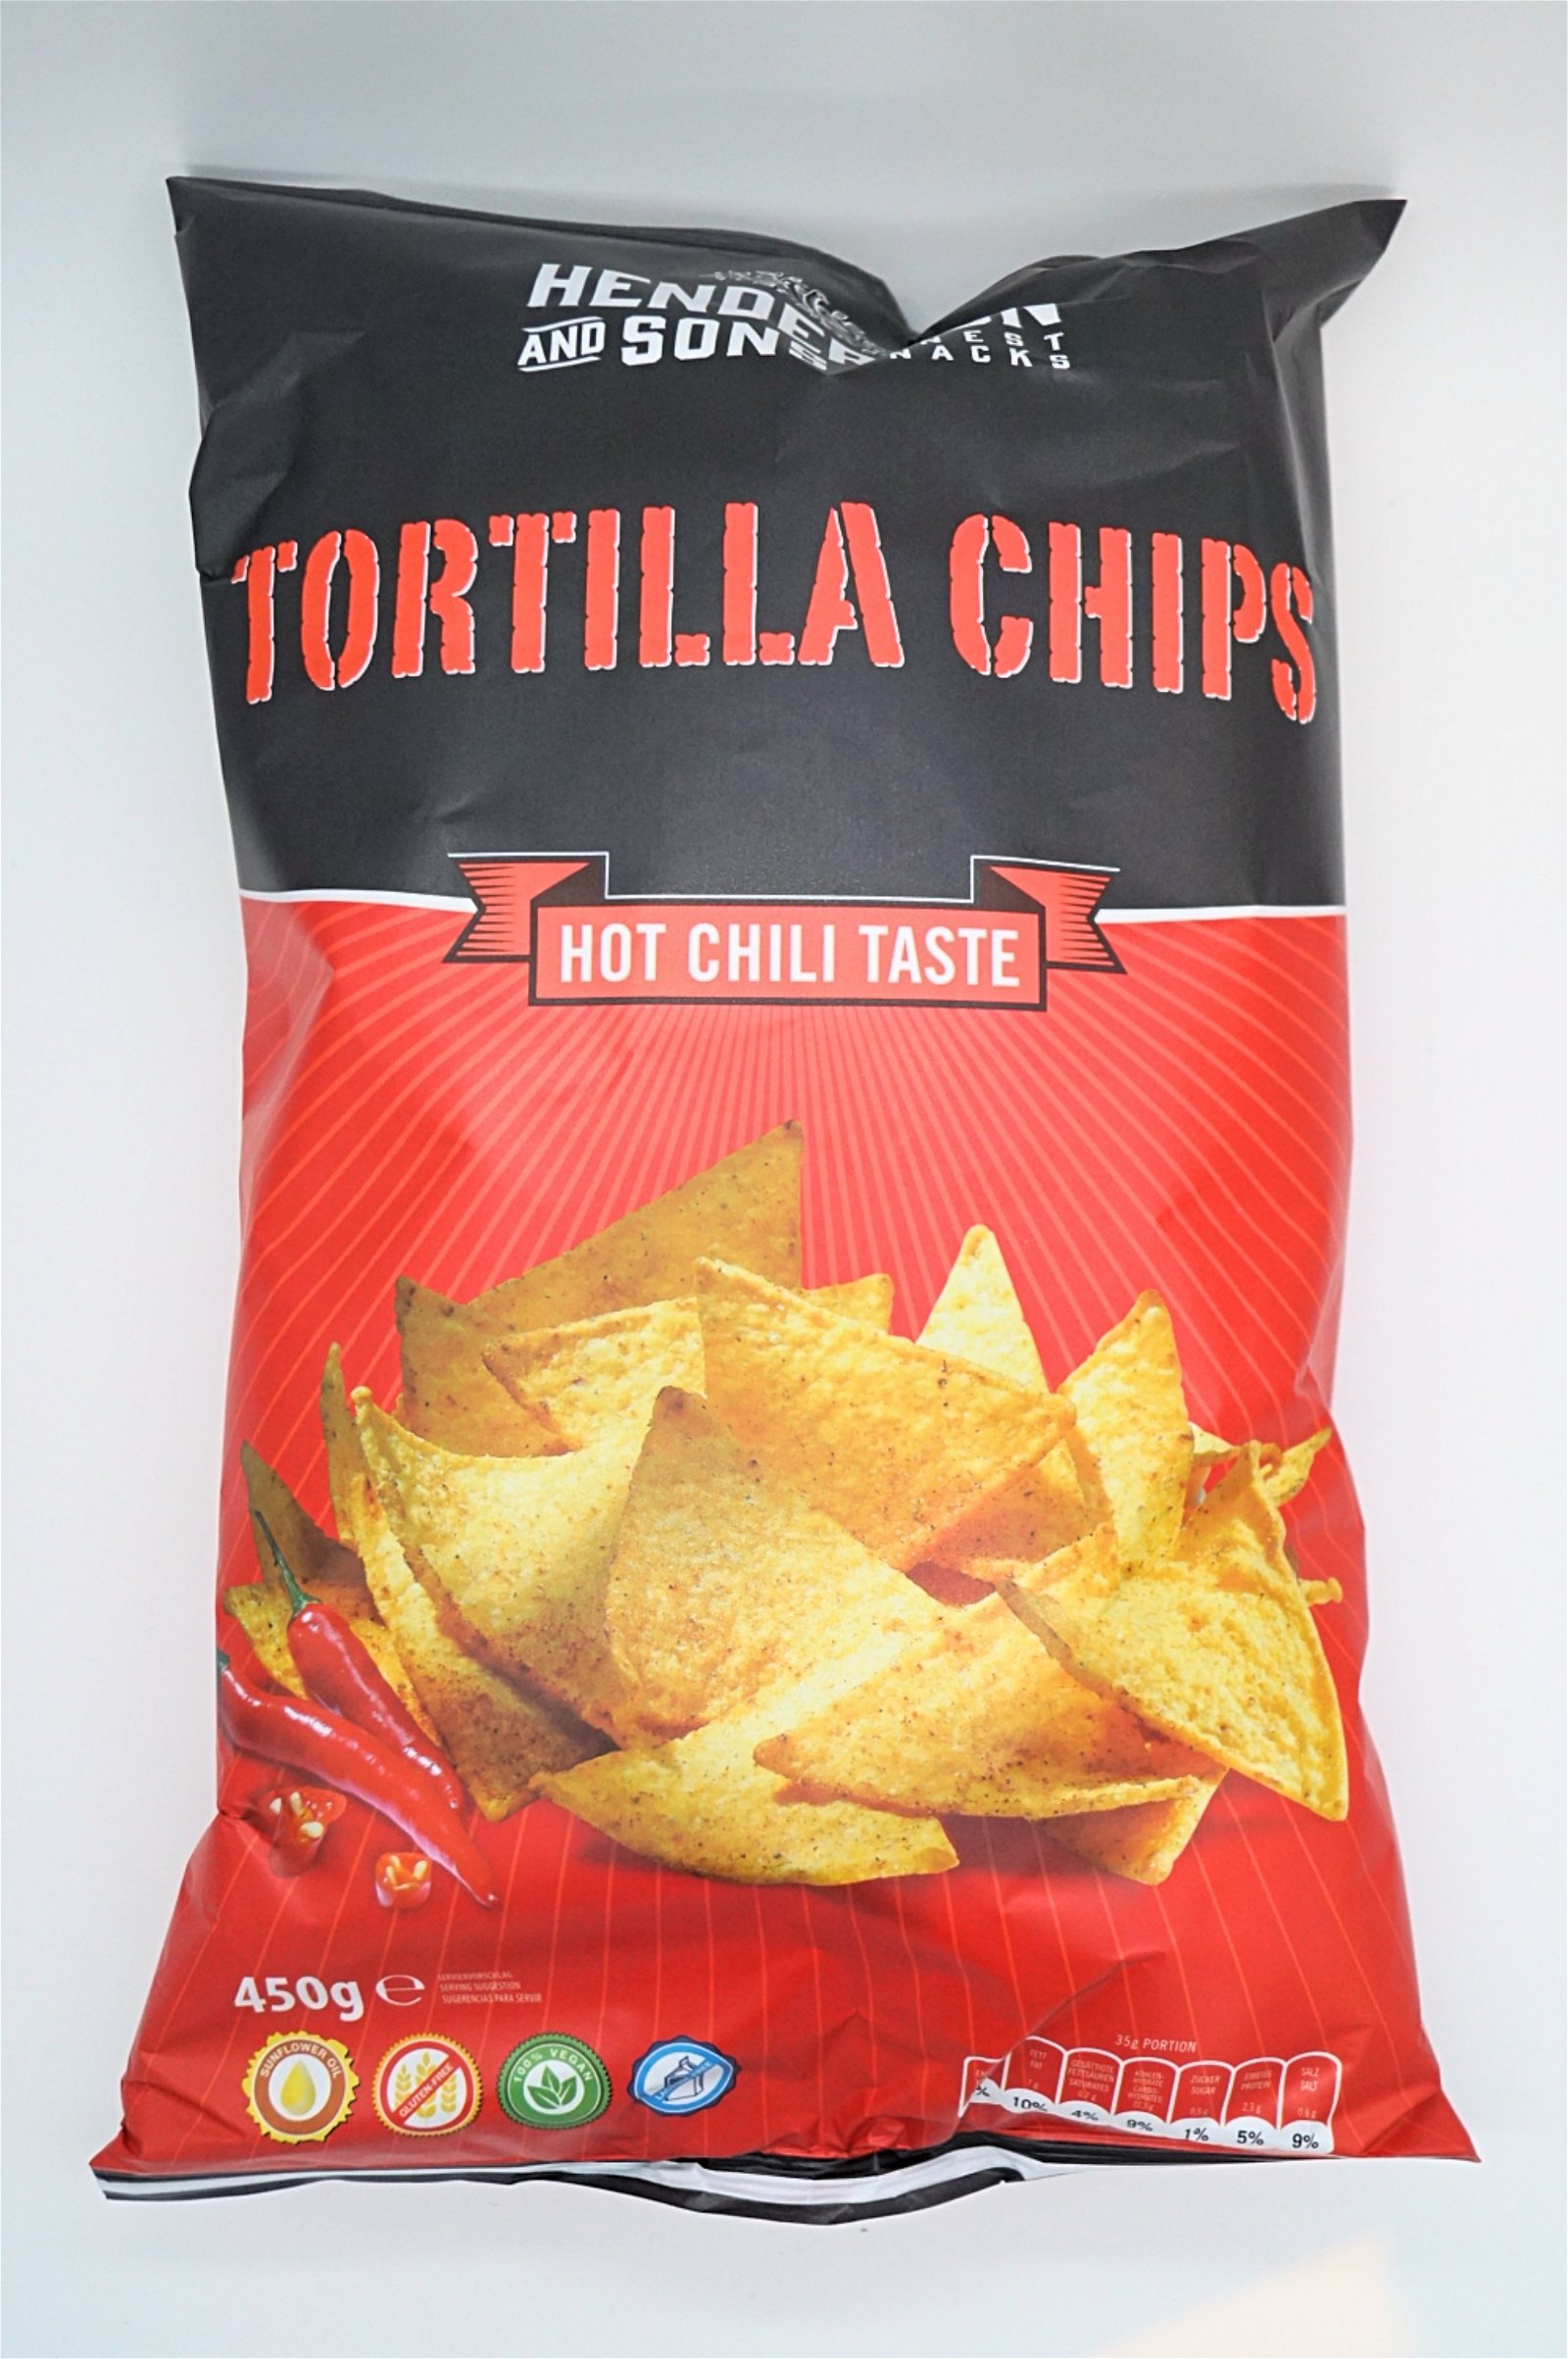 Henderson & Sons Tortilla Chips Hot Chili Taste 450g